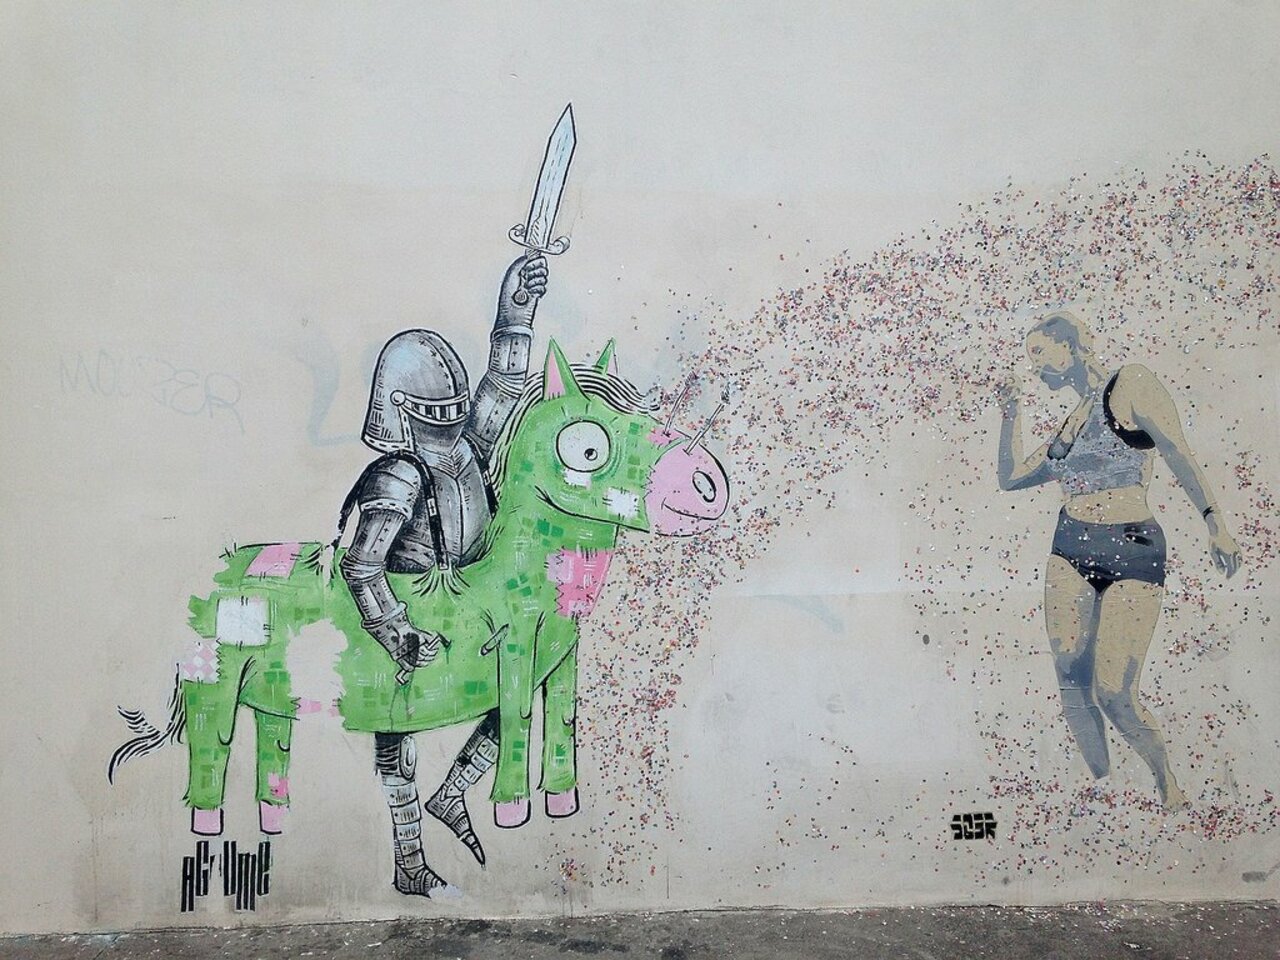 Street Art by Agrume in #Paris http://www.urbacolors.com #art #mural #graffiti #streetart https://t.co/QVF0D7VZrS